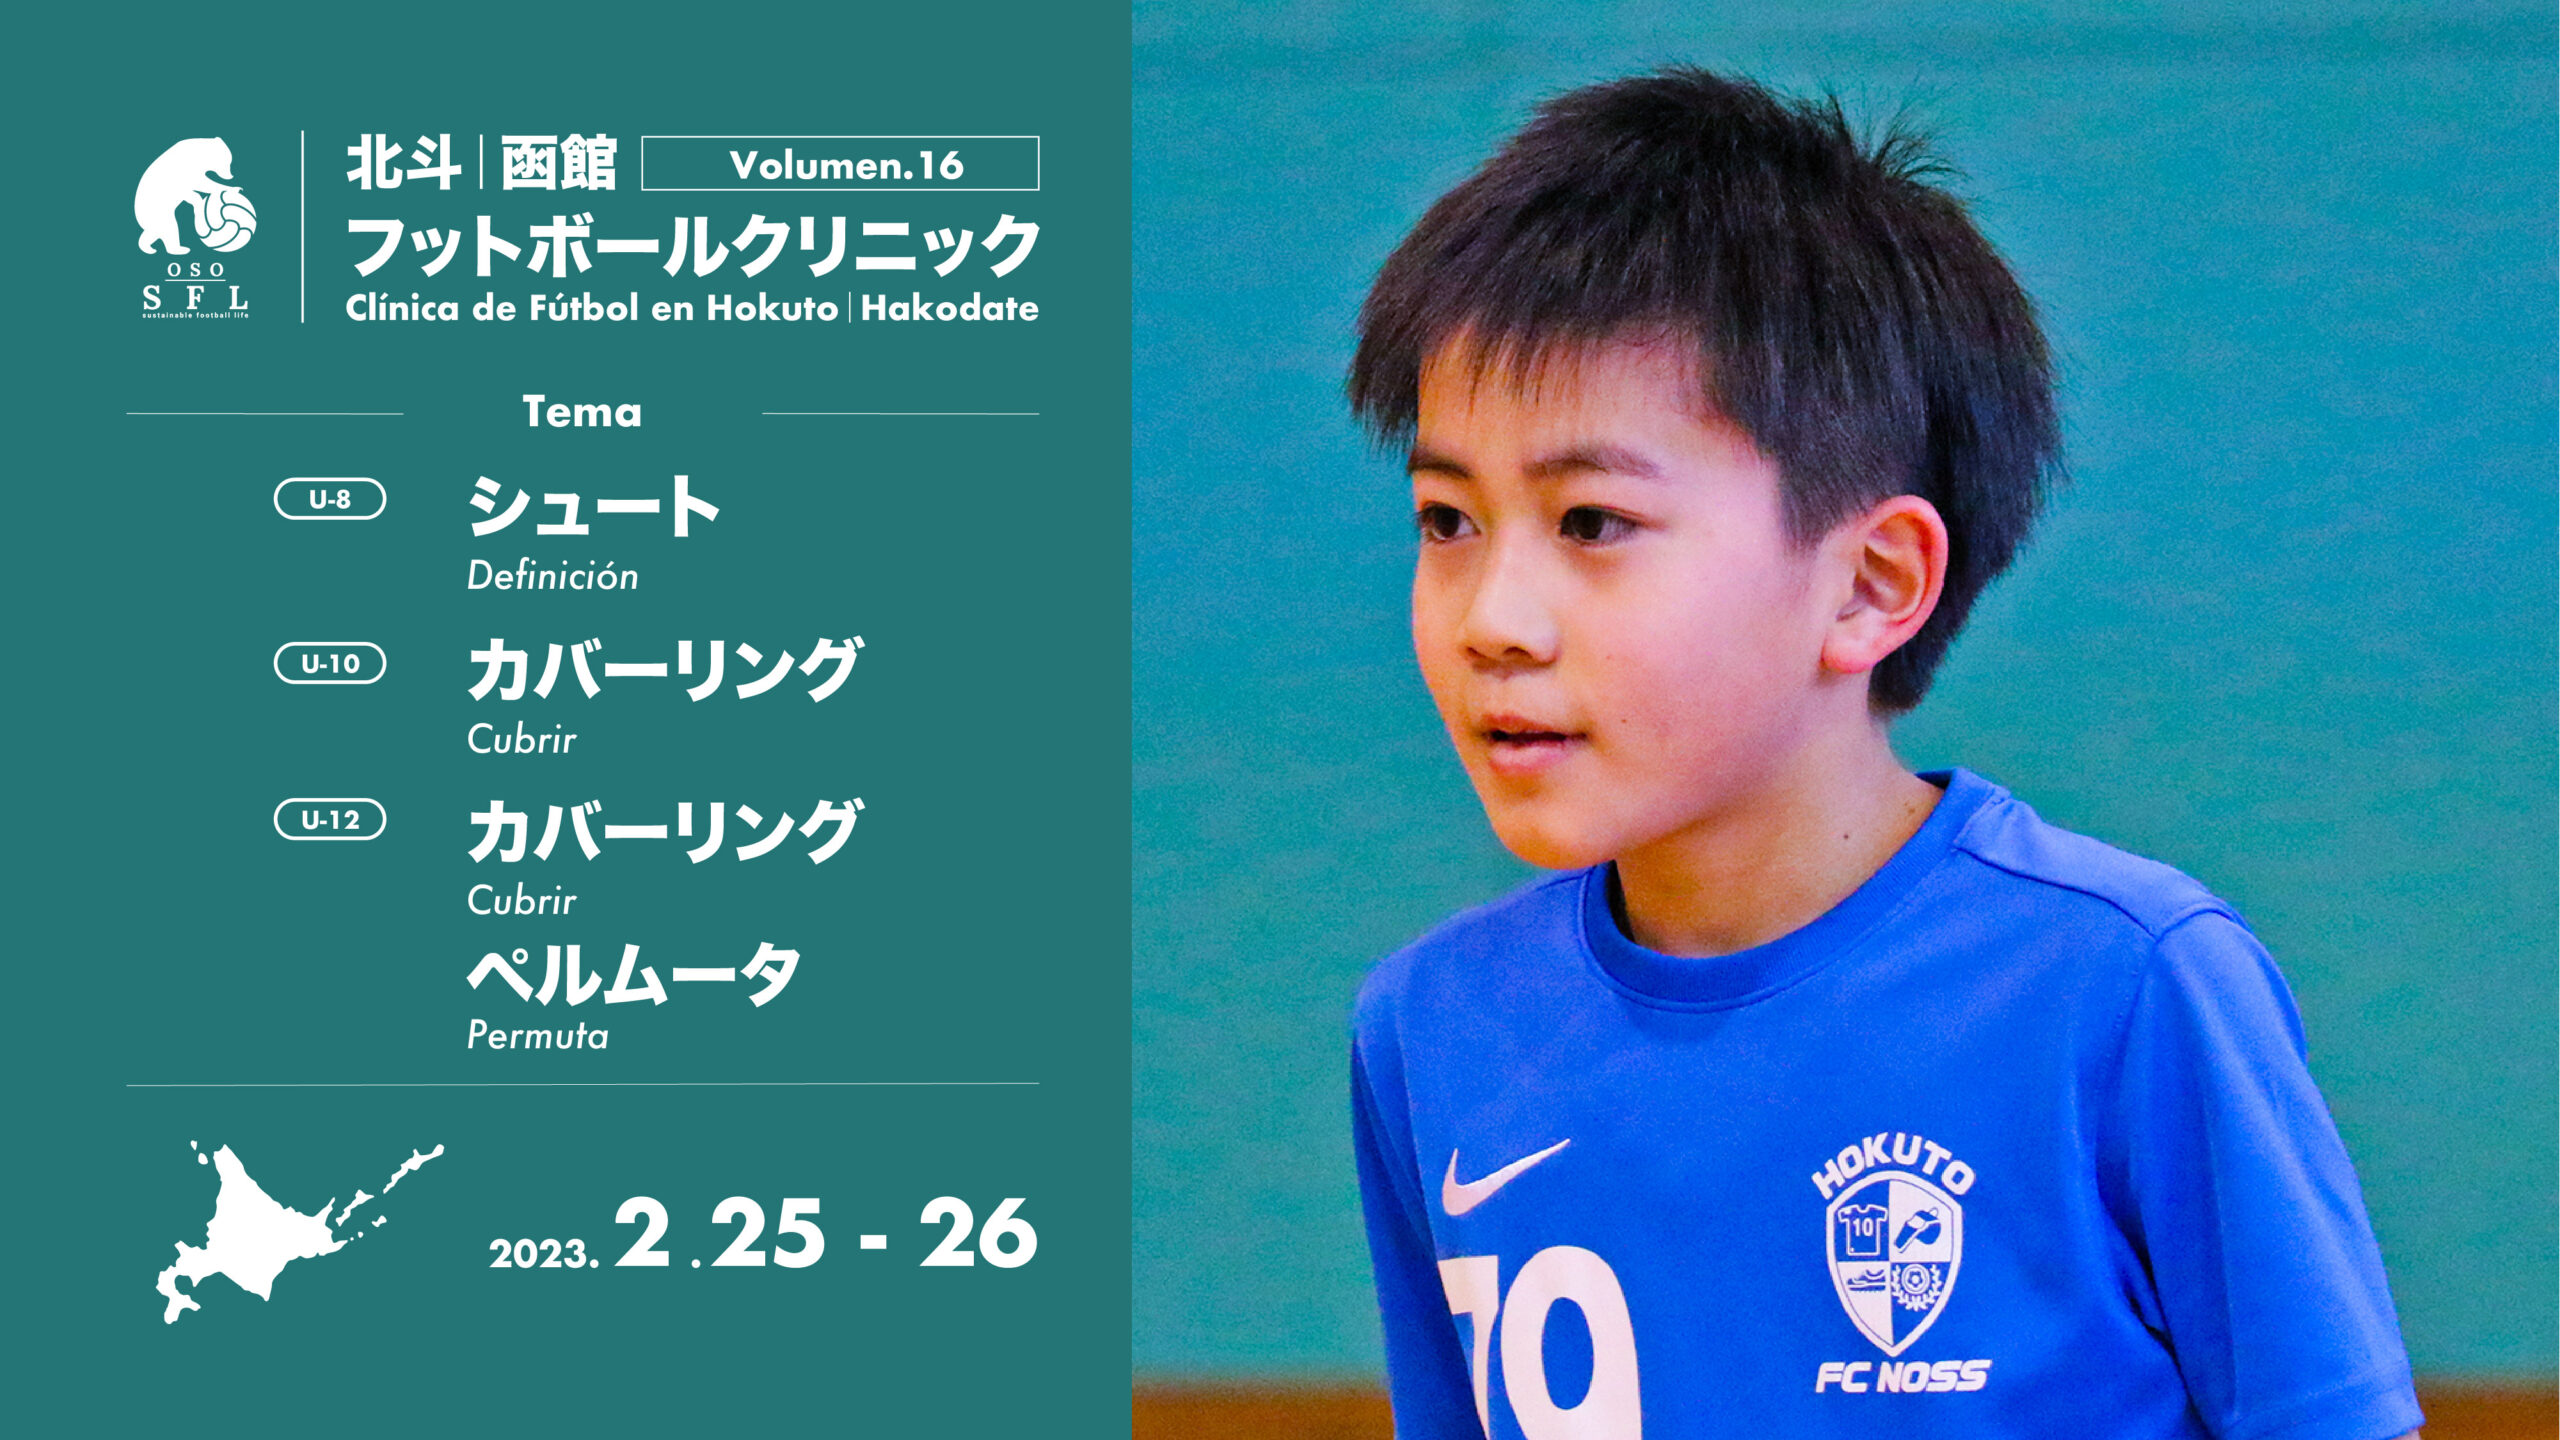 20230123_notice-hokuto-hakodate-football-clinic-2023-vol16_1920px